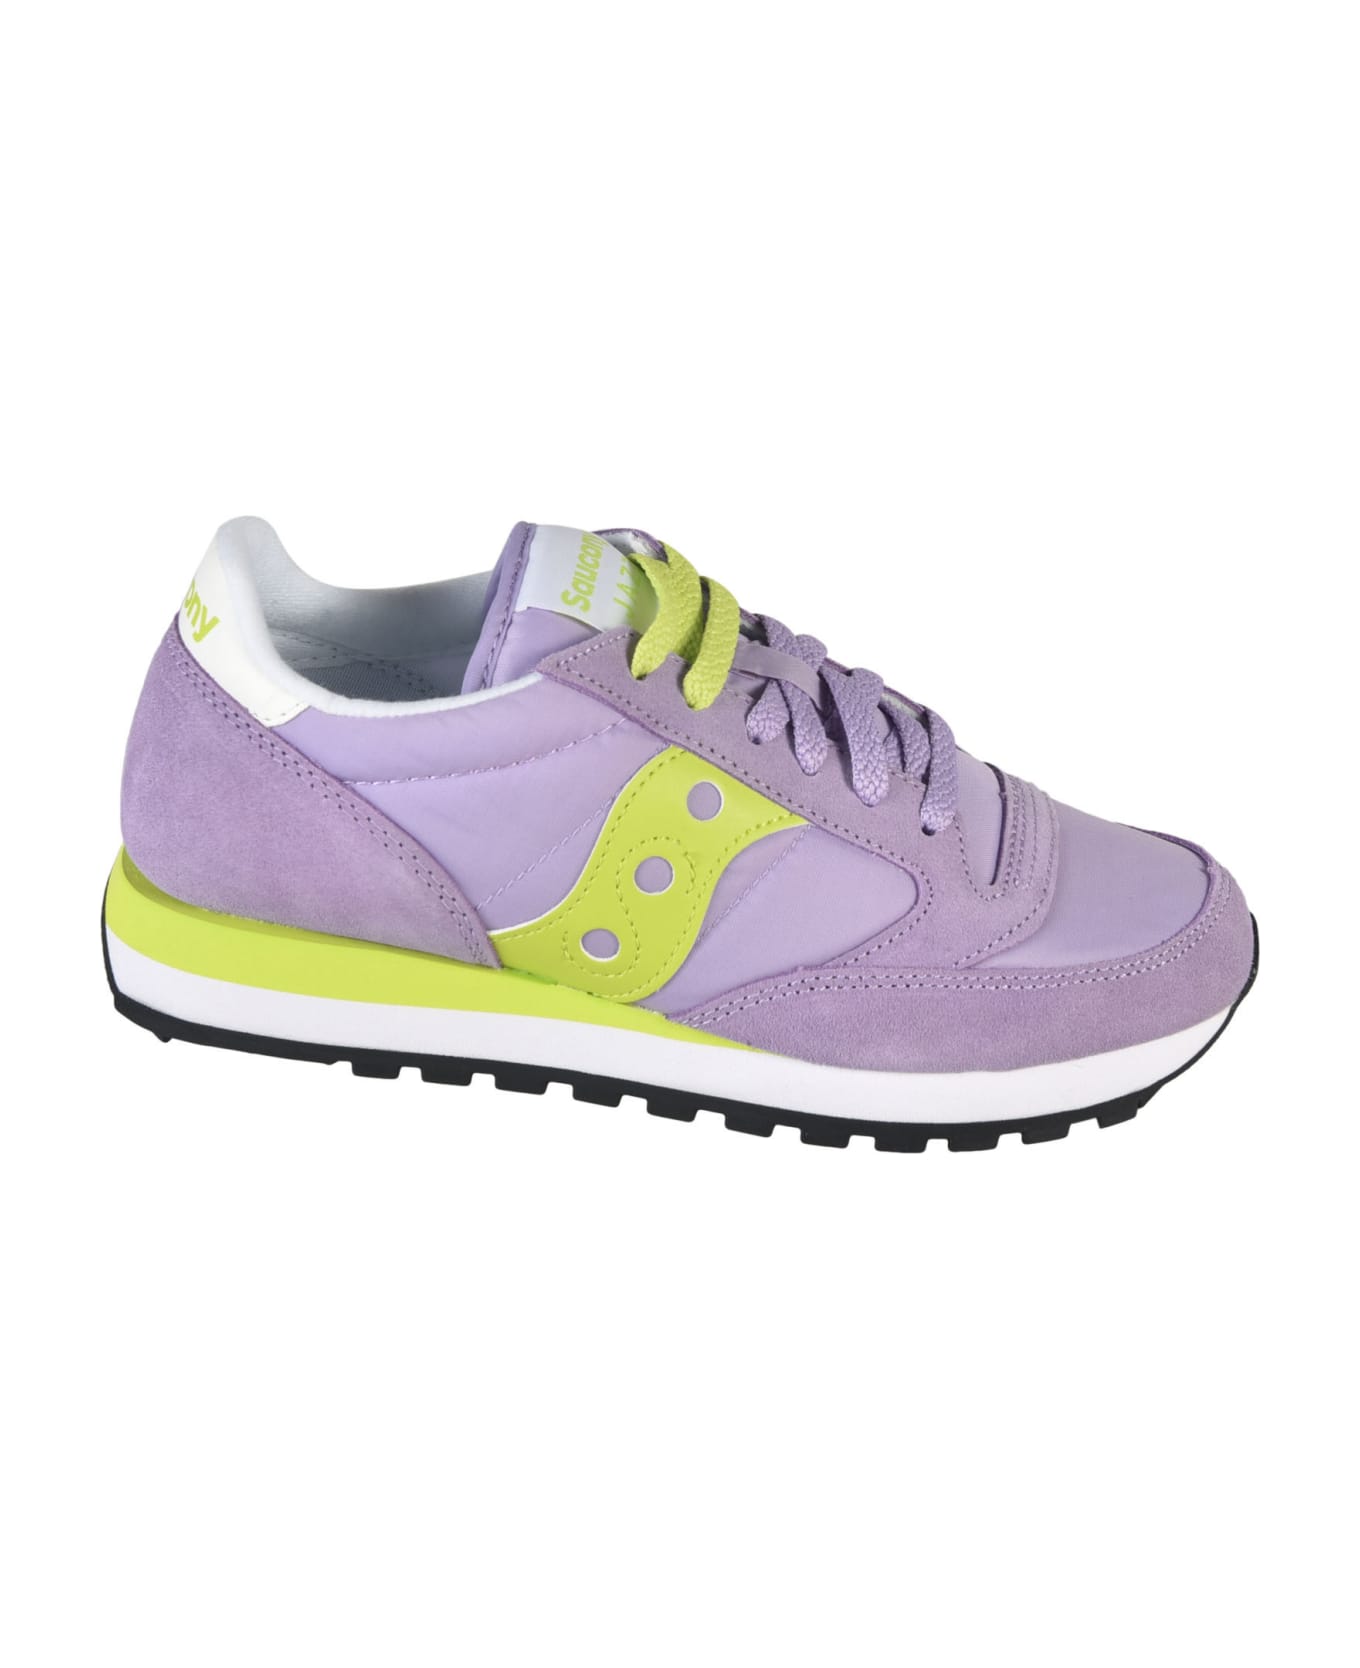 Saucony Jazz Original Sneakers - Purple/Lime